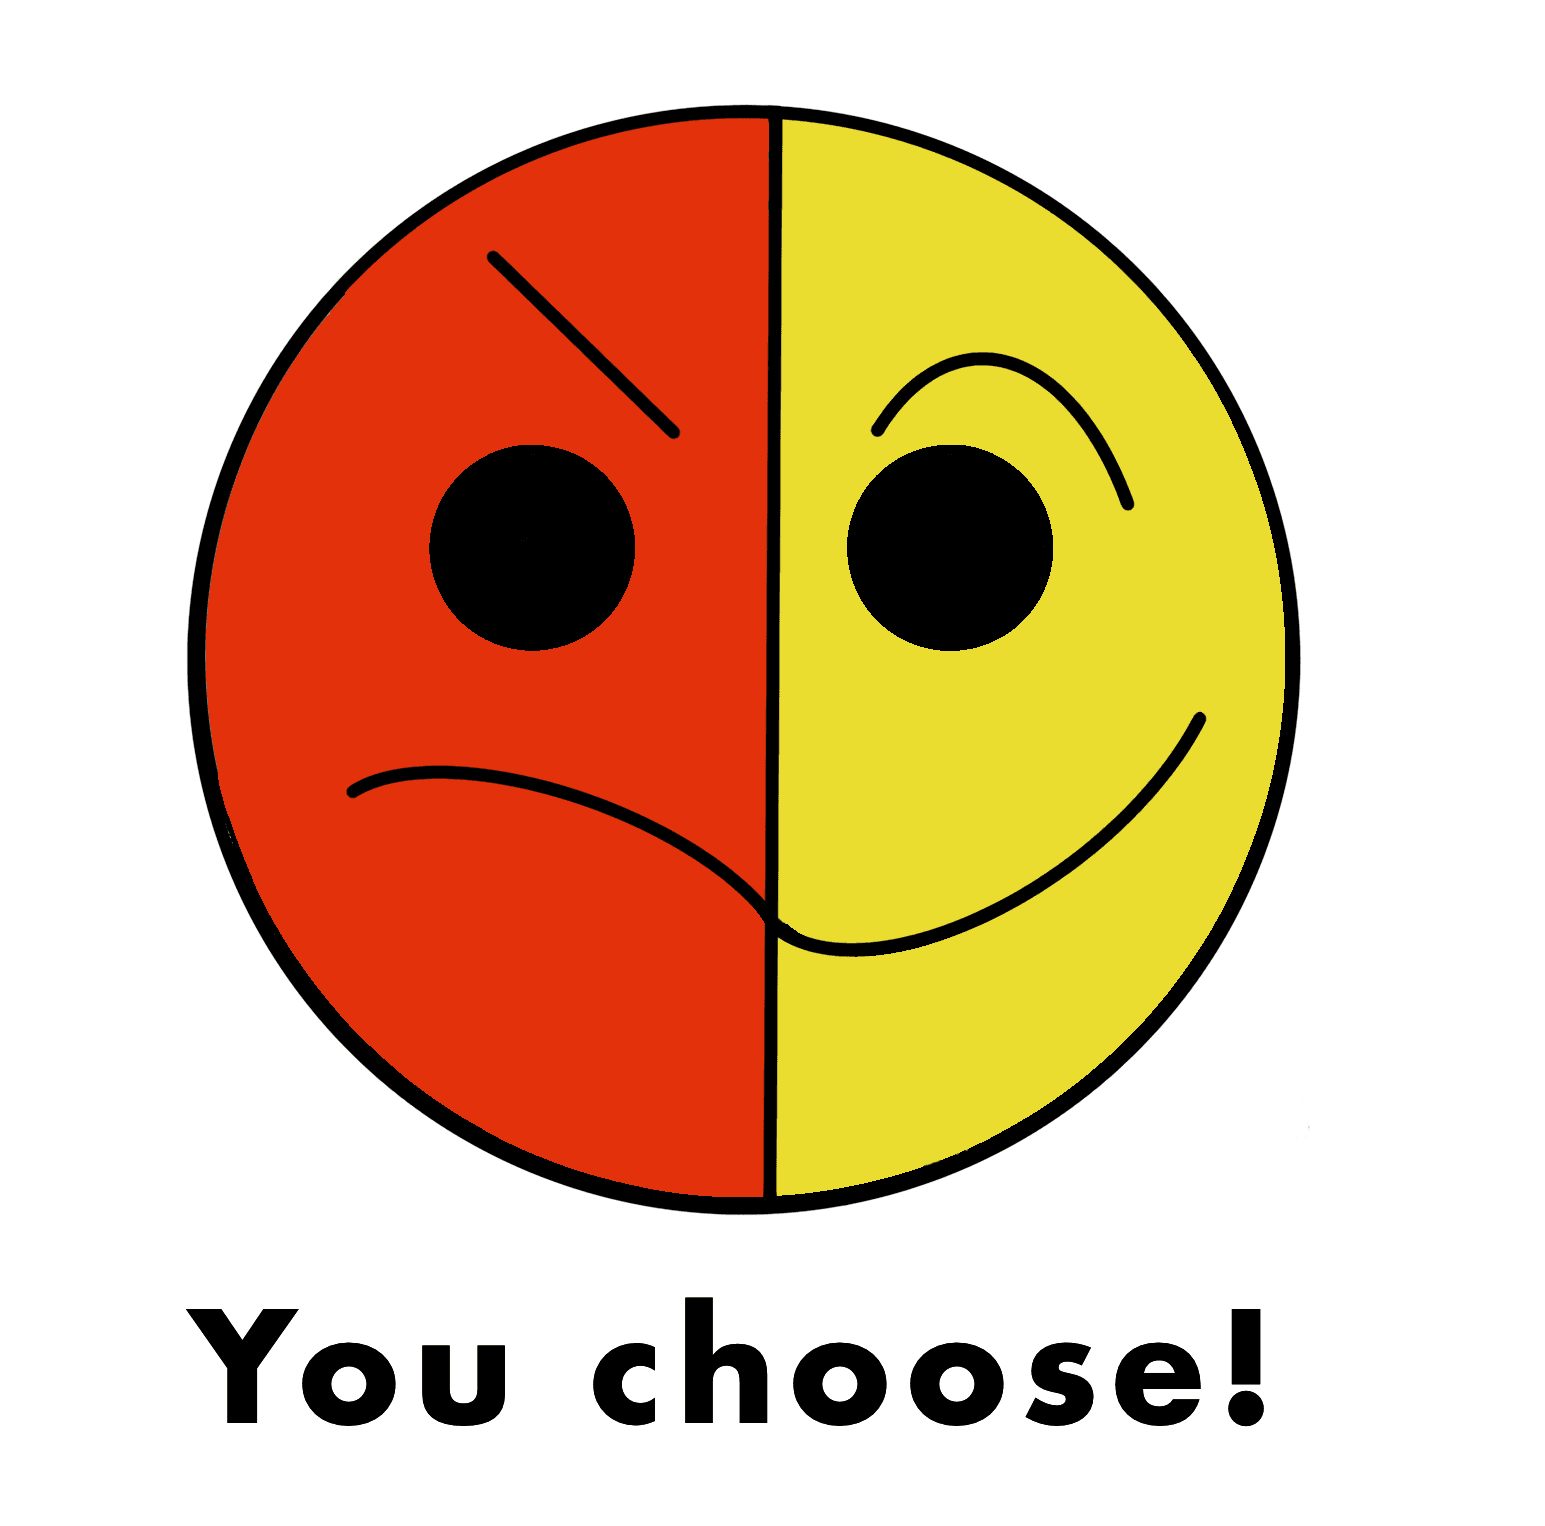 You choose!